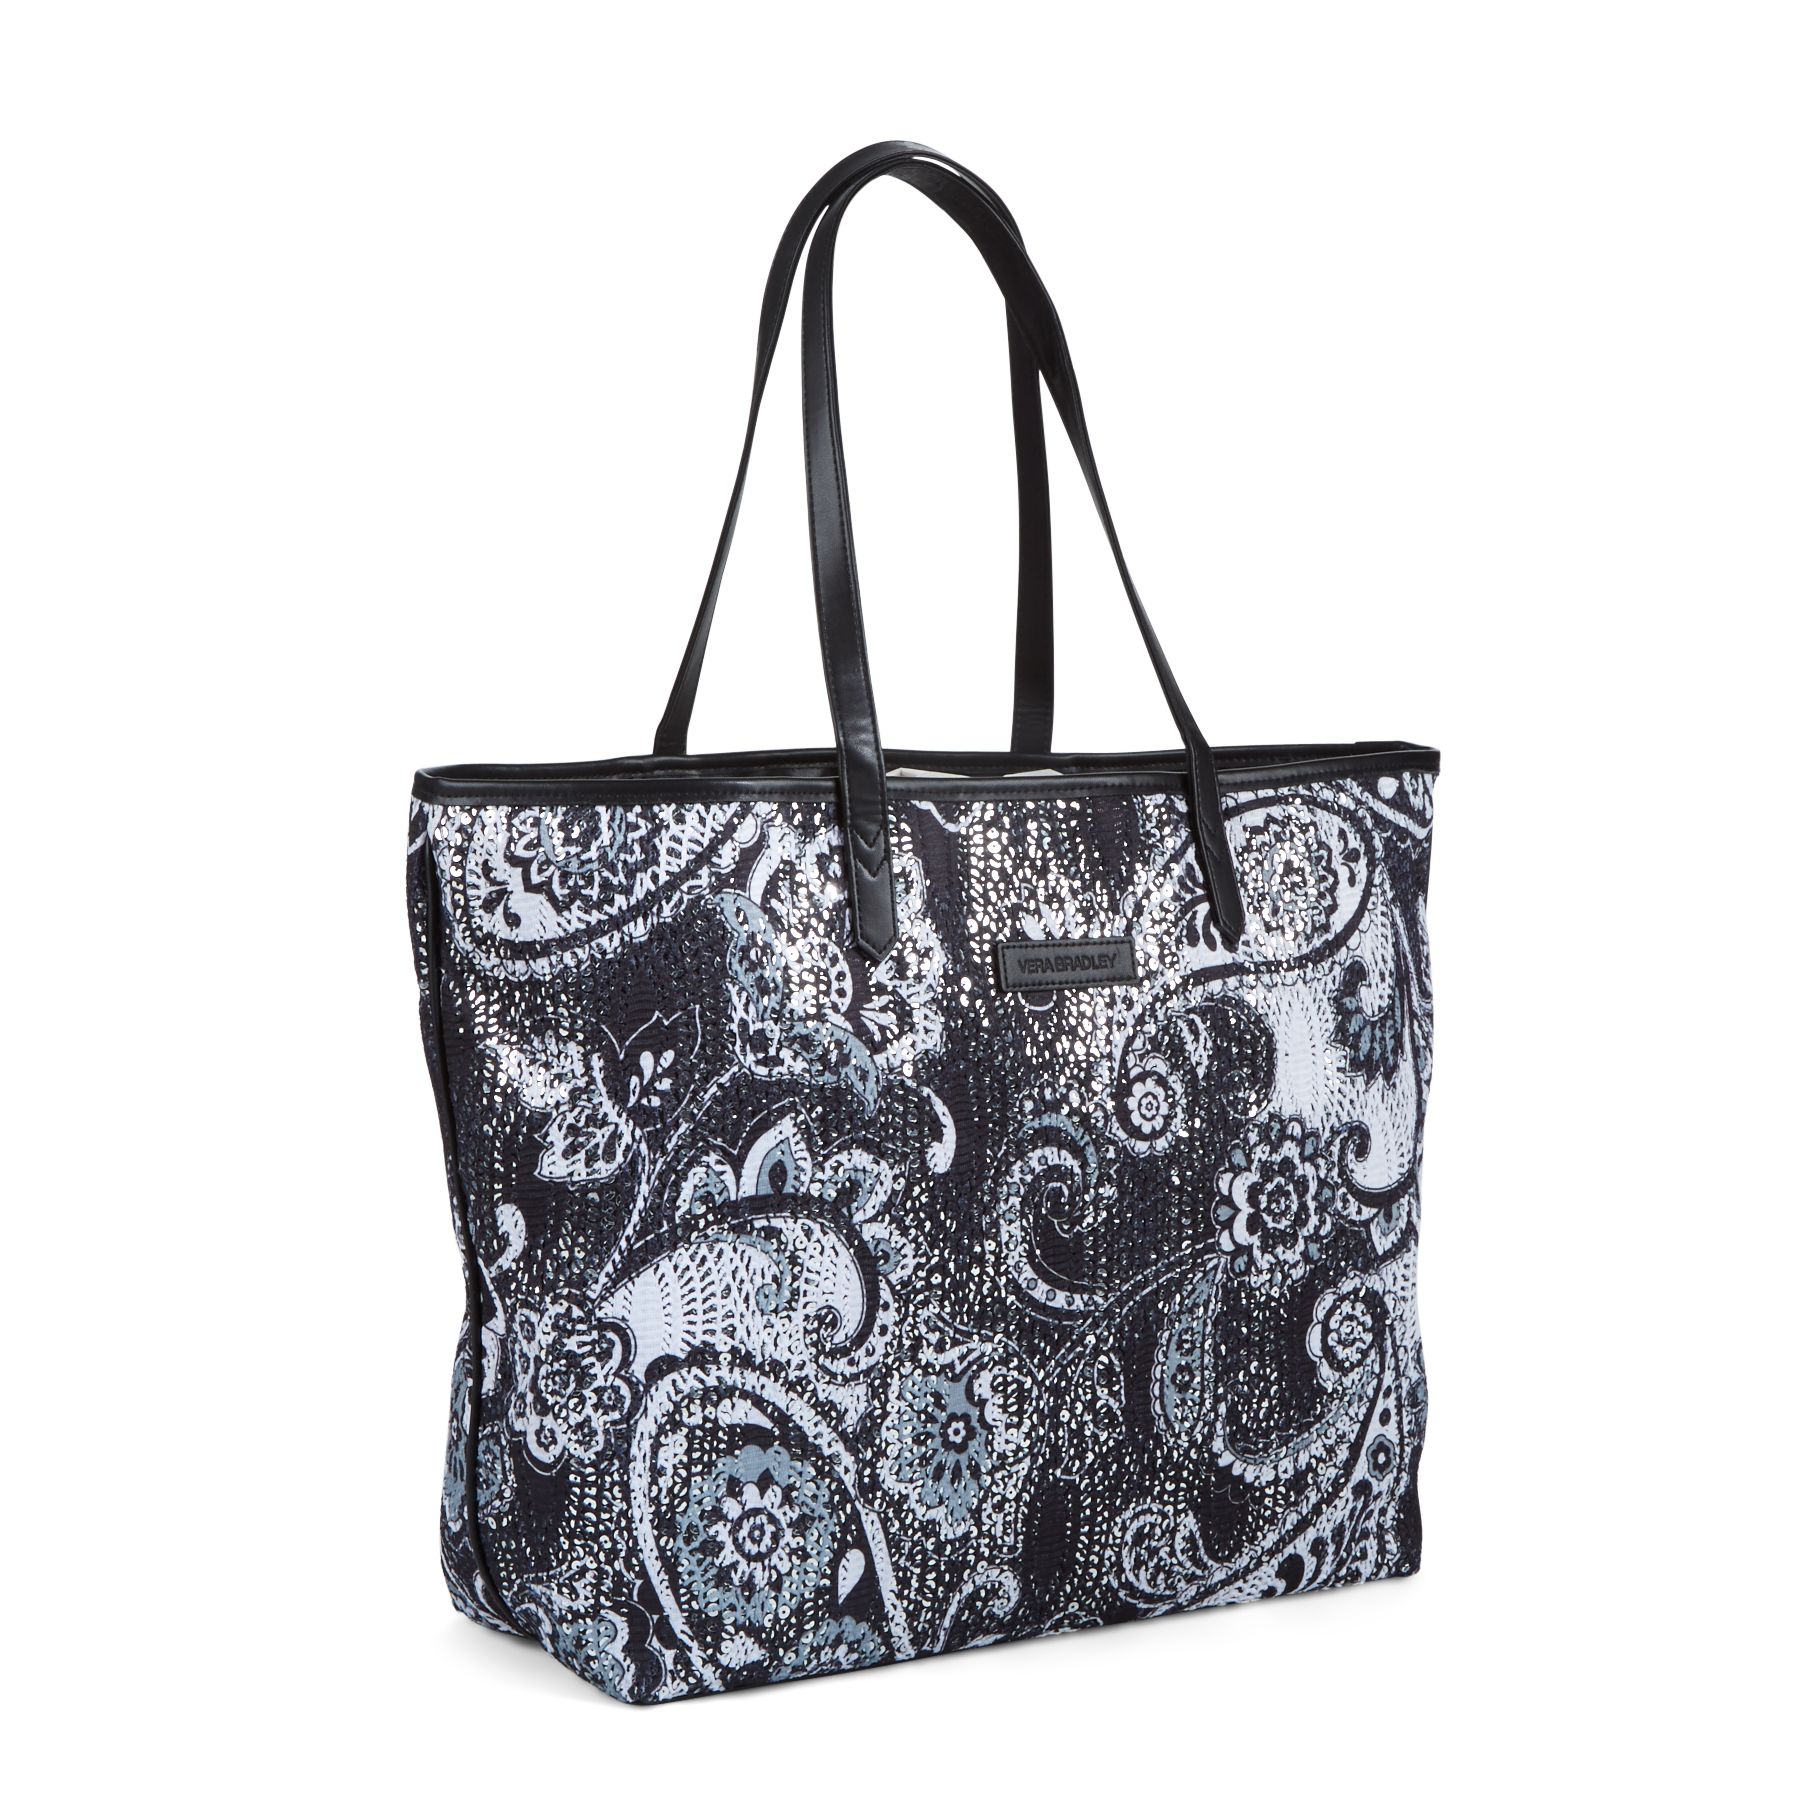 Vera Bradley Sparkle Tote Bag | eBay